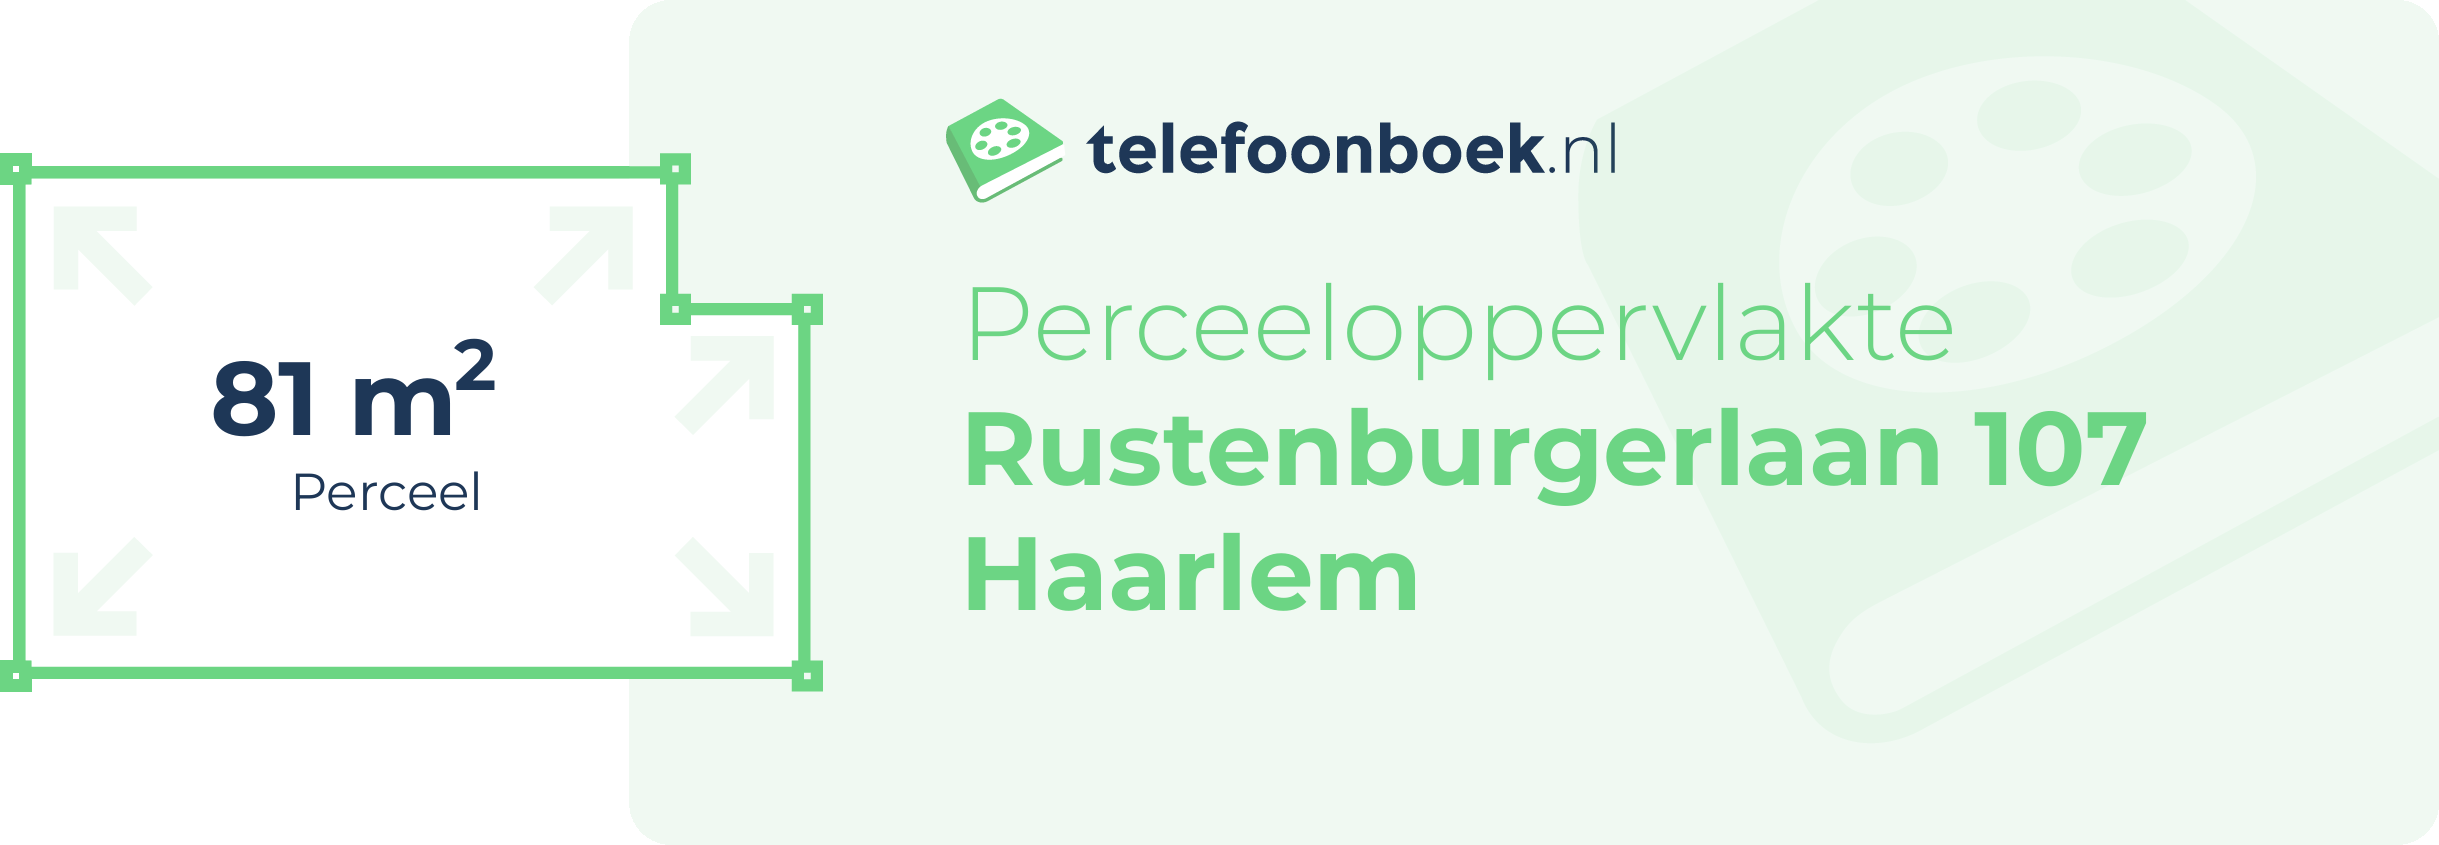 Perceeloppervlakte Rustenburgerlaan 107 Haarlem